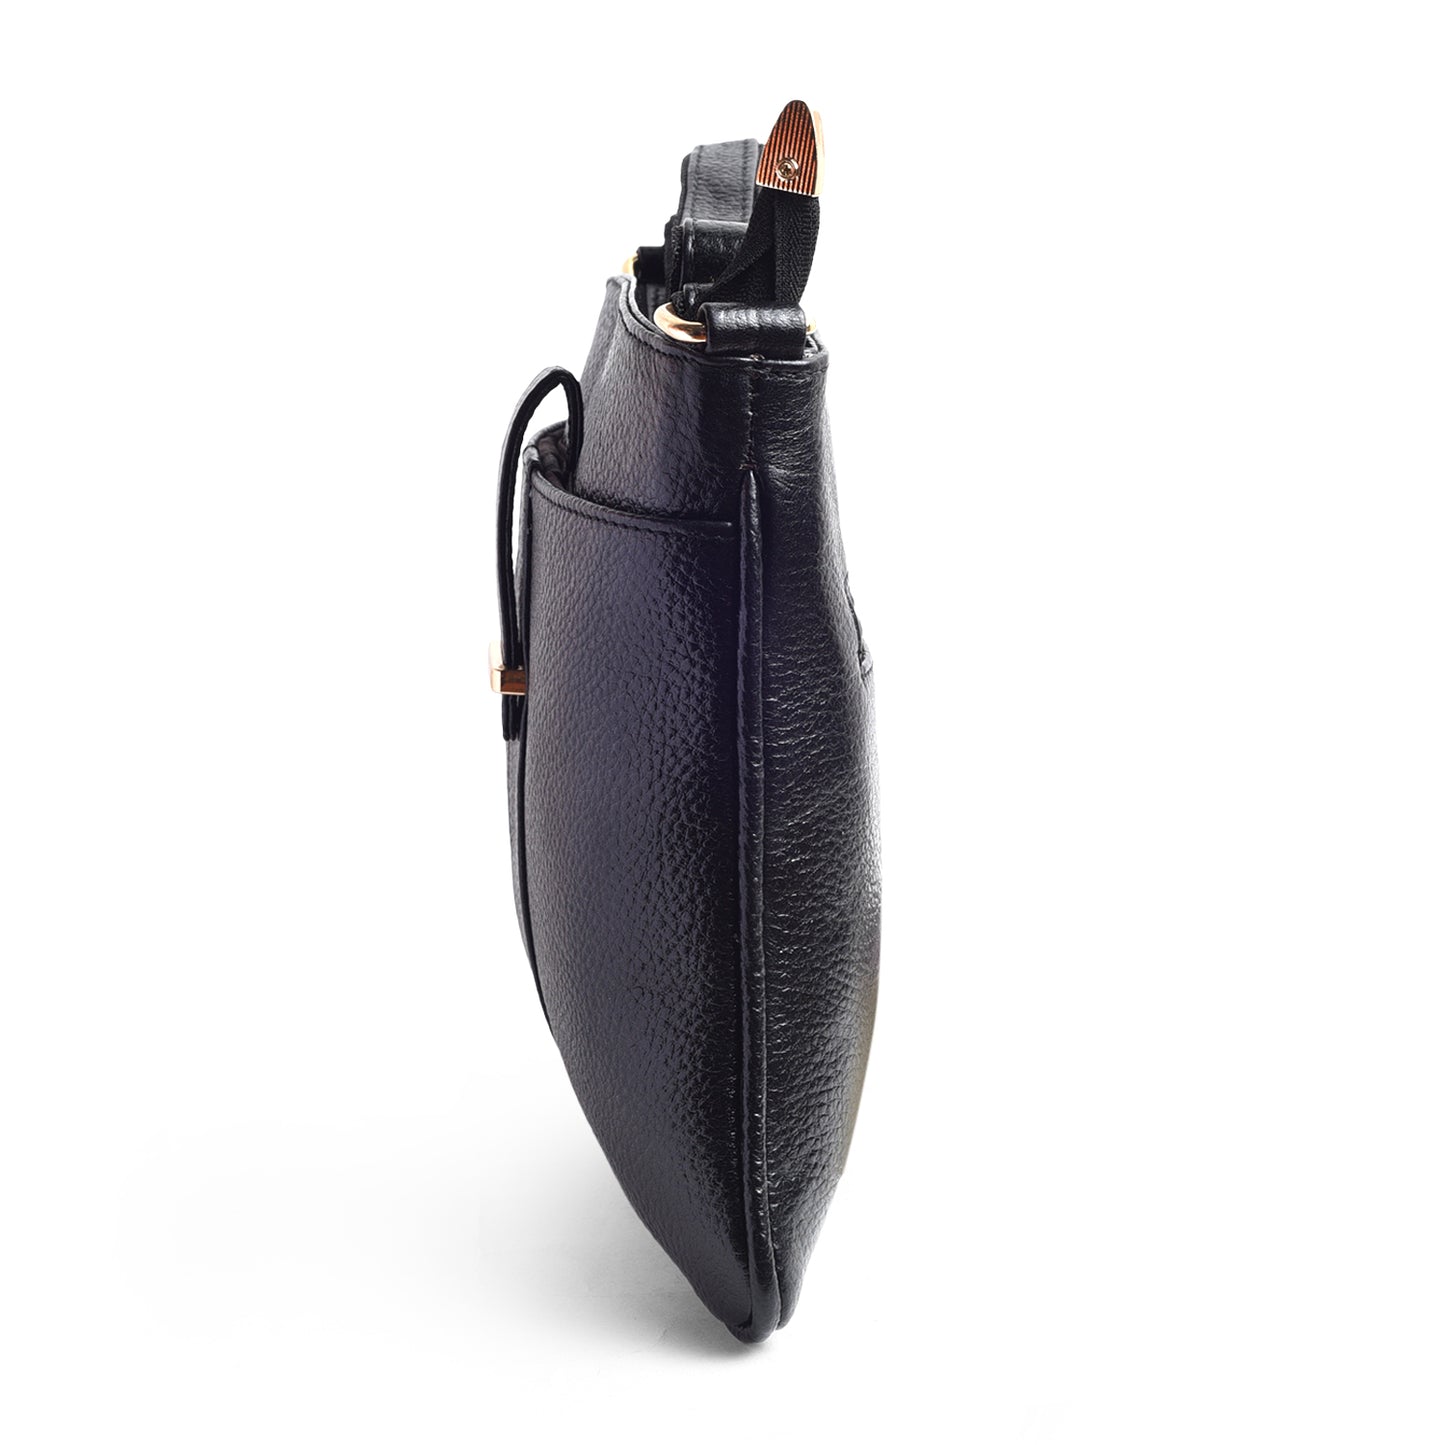 Aura Black Genuine Leather Sling Bag For Girls and  Women